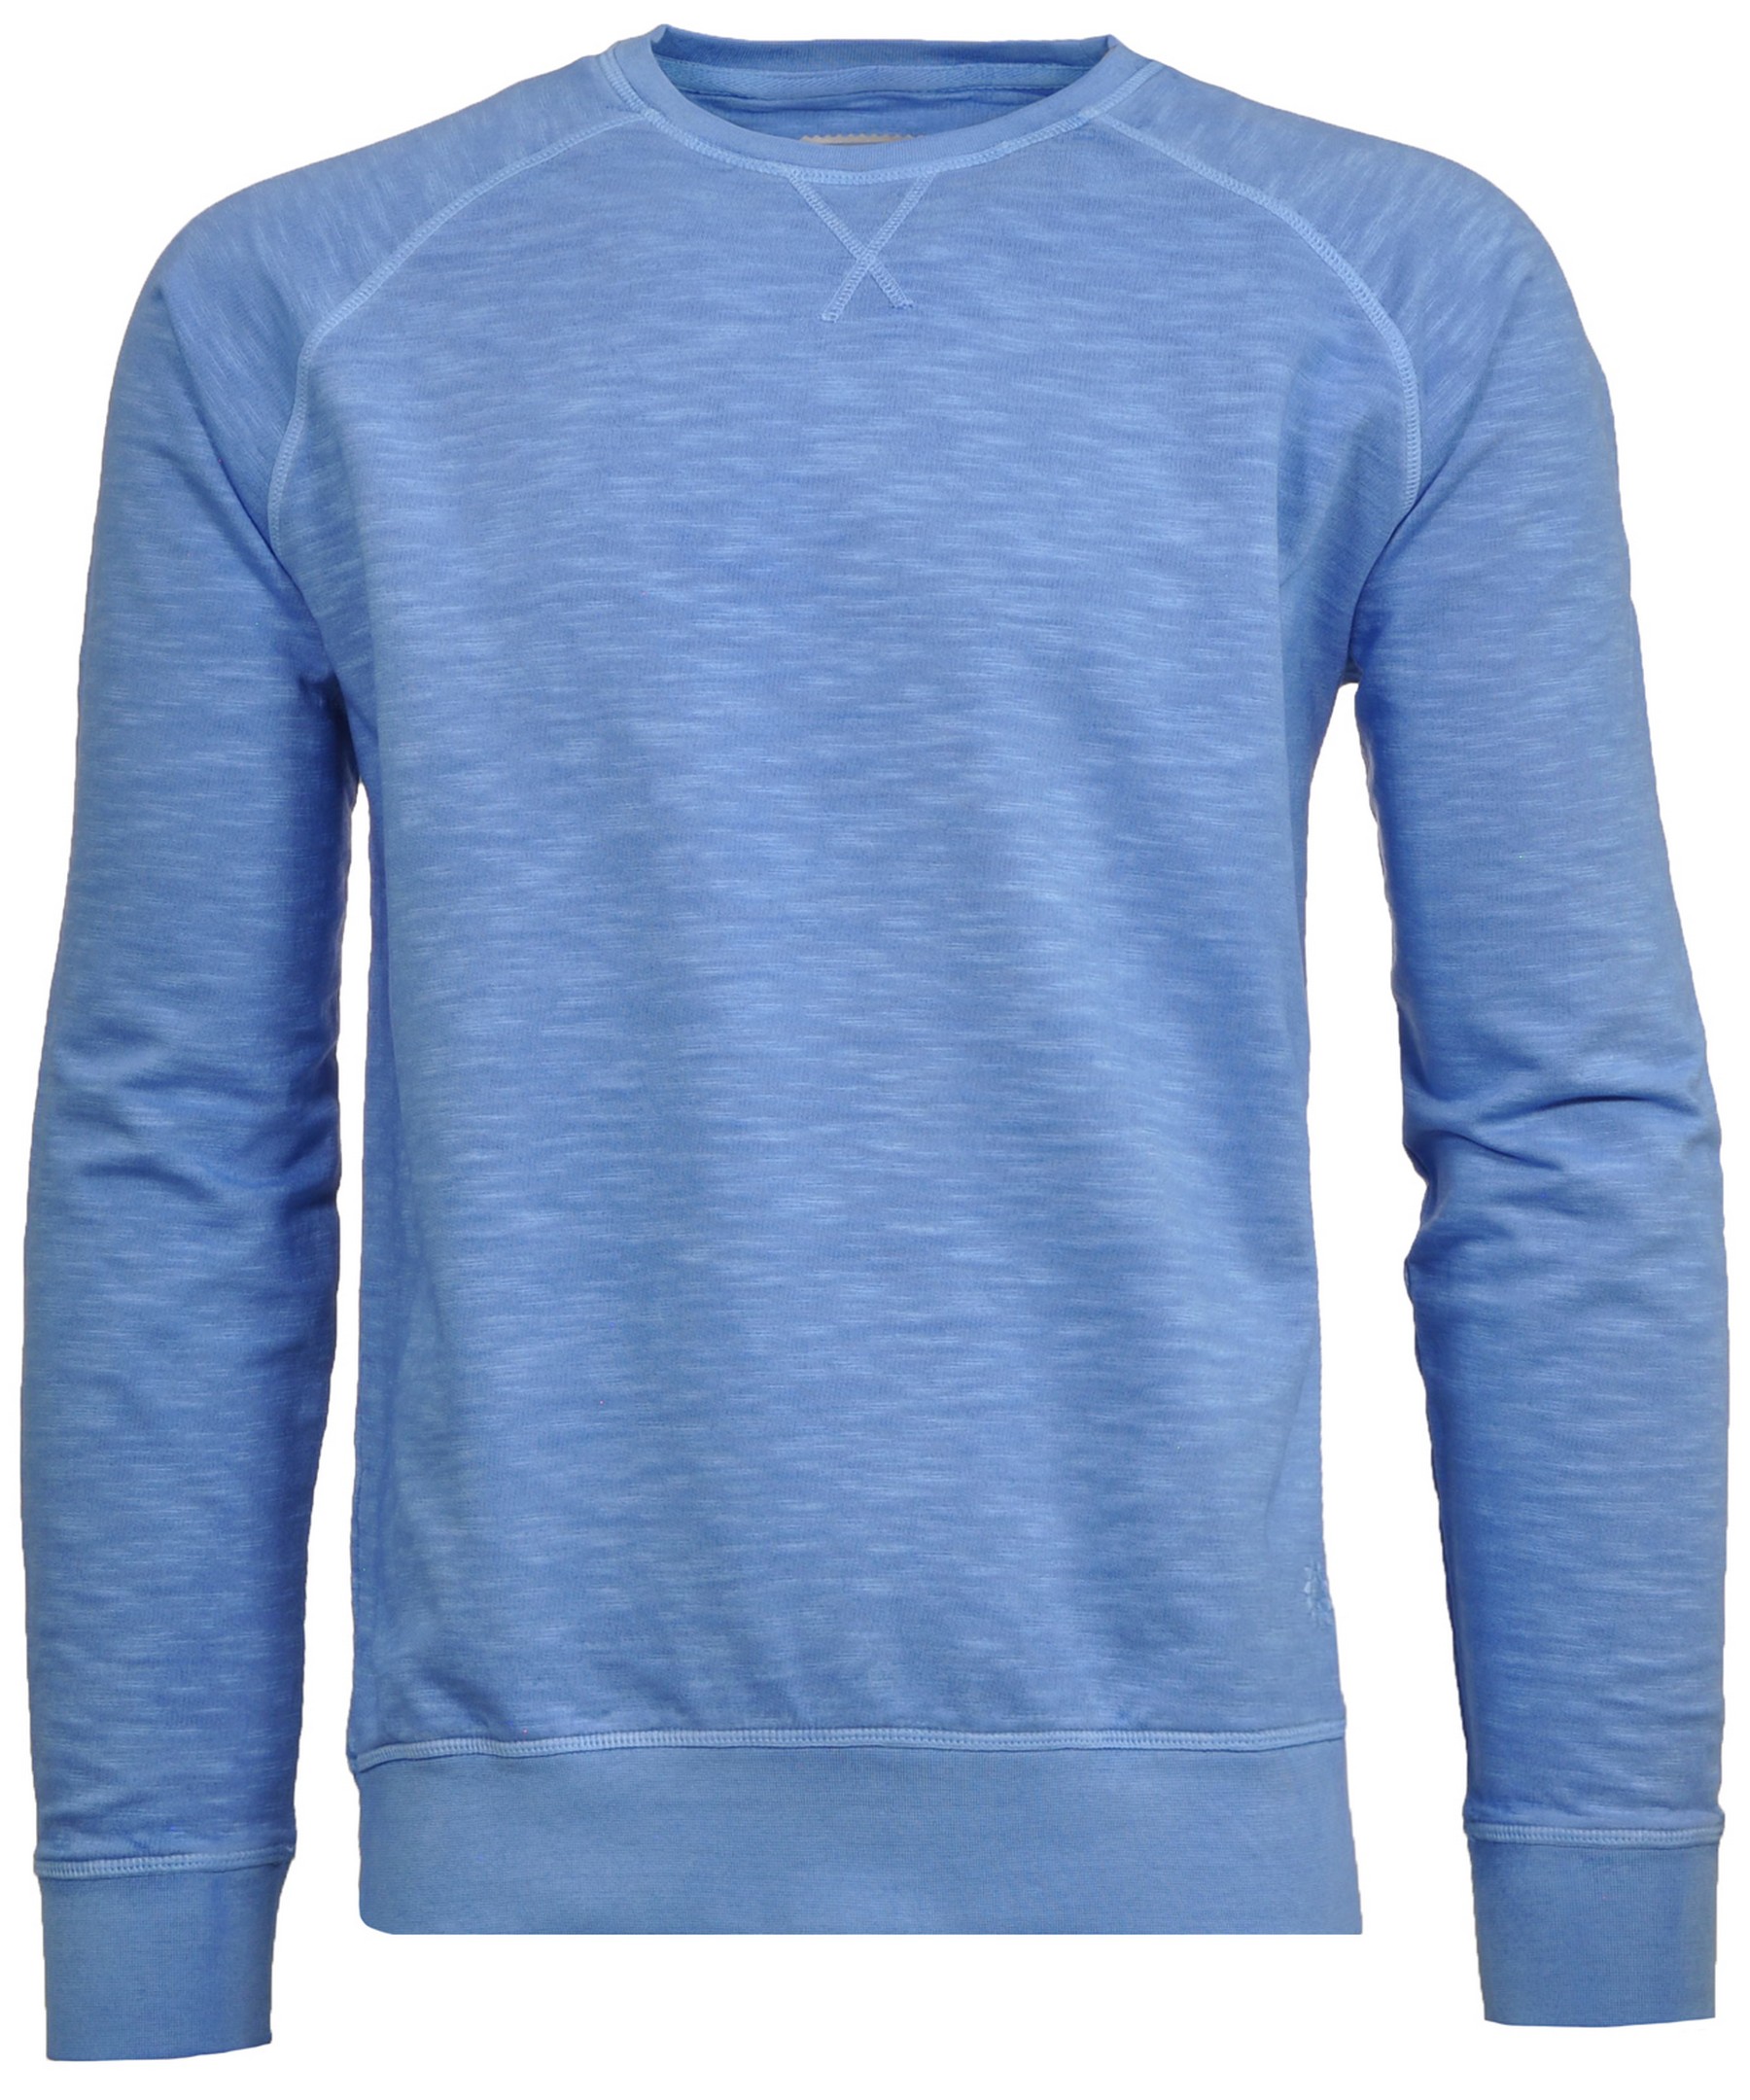 Ragman Sweat Fine Subtle Flame Round Neck Pullover Bright Blue | Jan Rozing  Men's Fashion